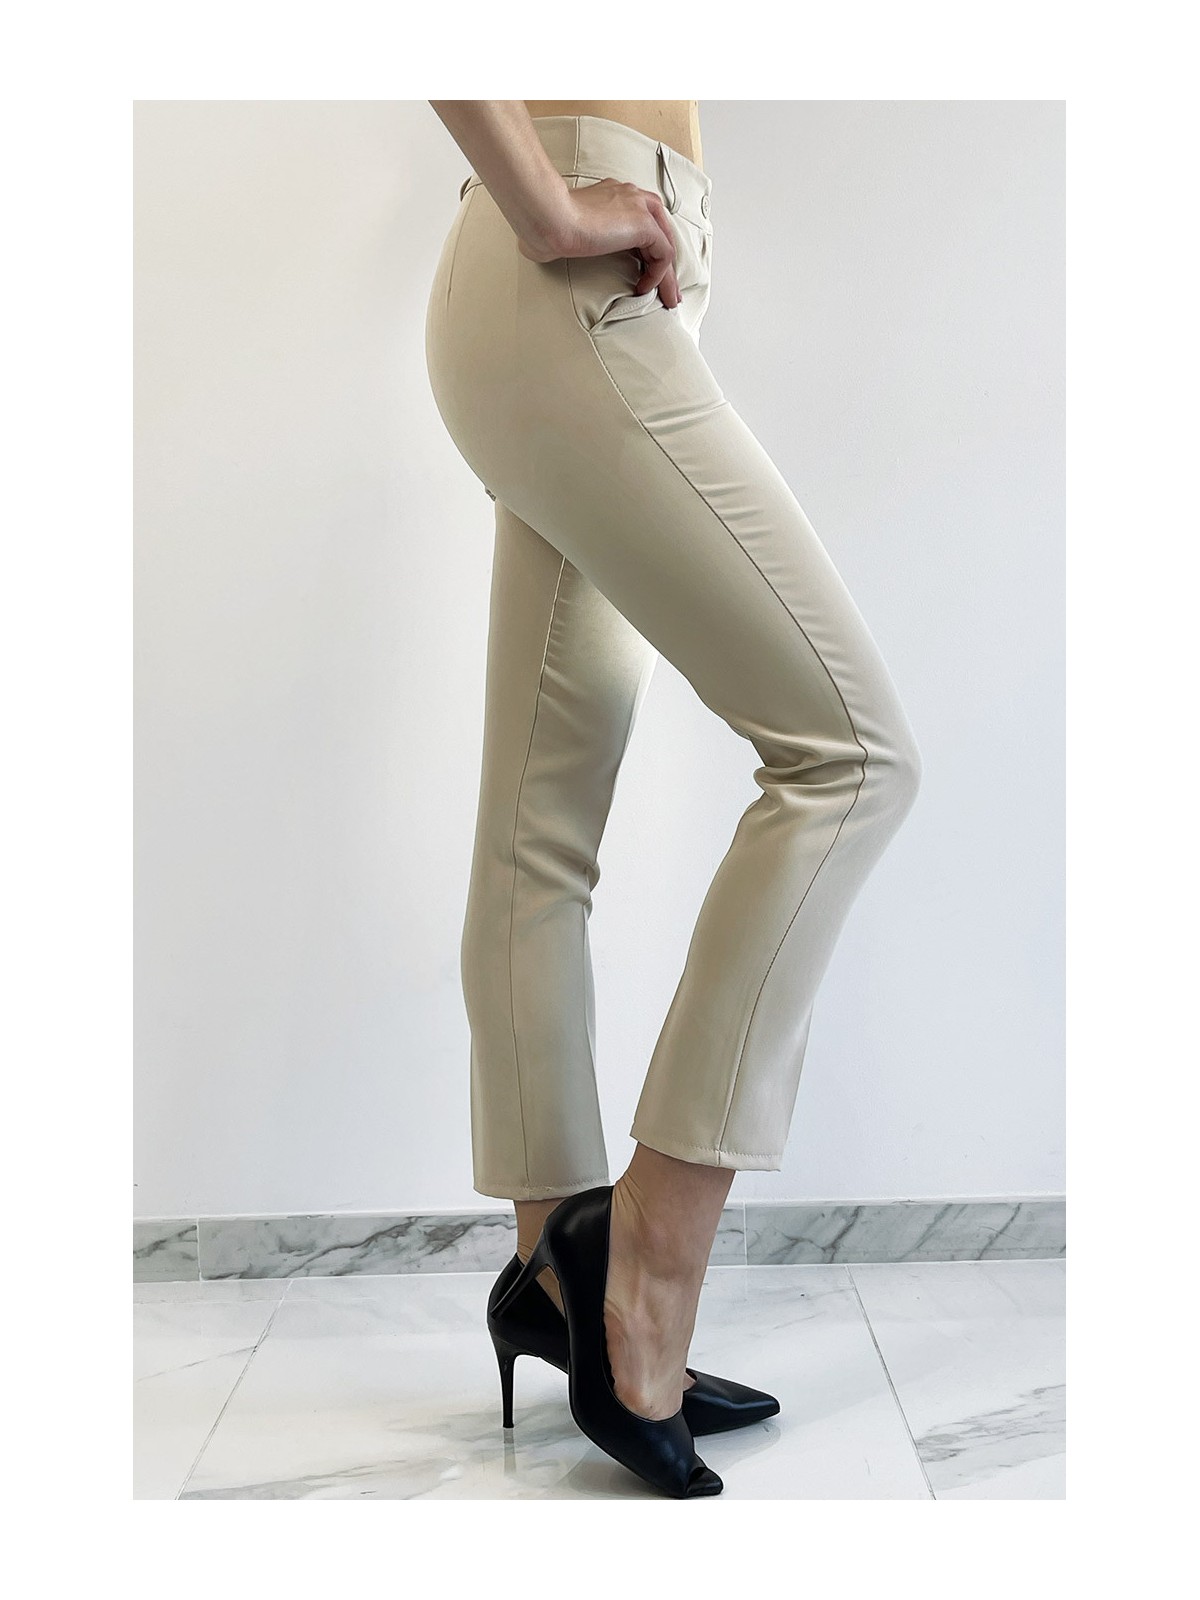 Pantalon slim beige avec poches style working girl - 4